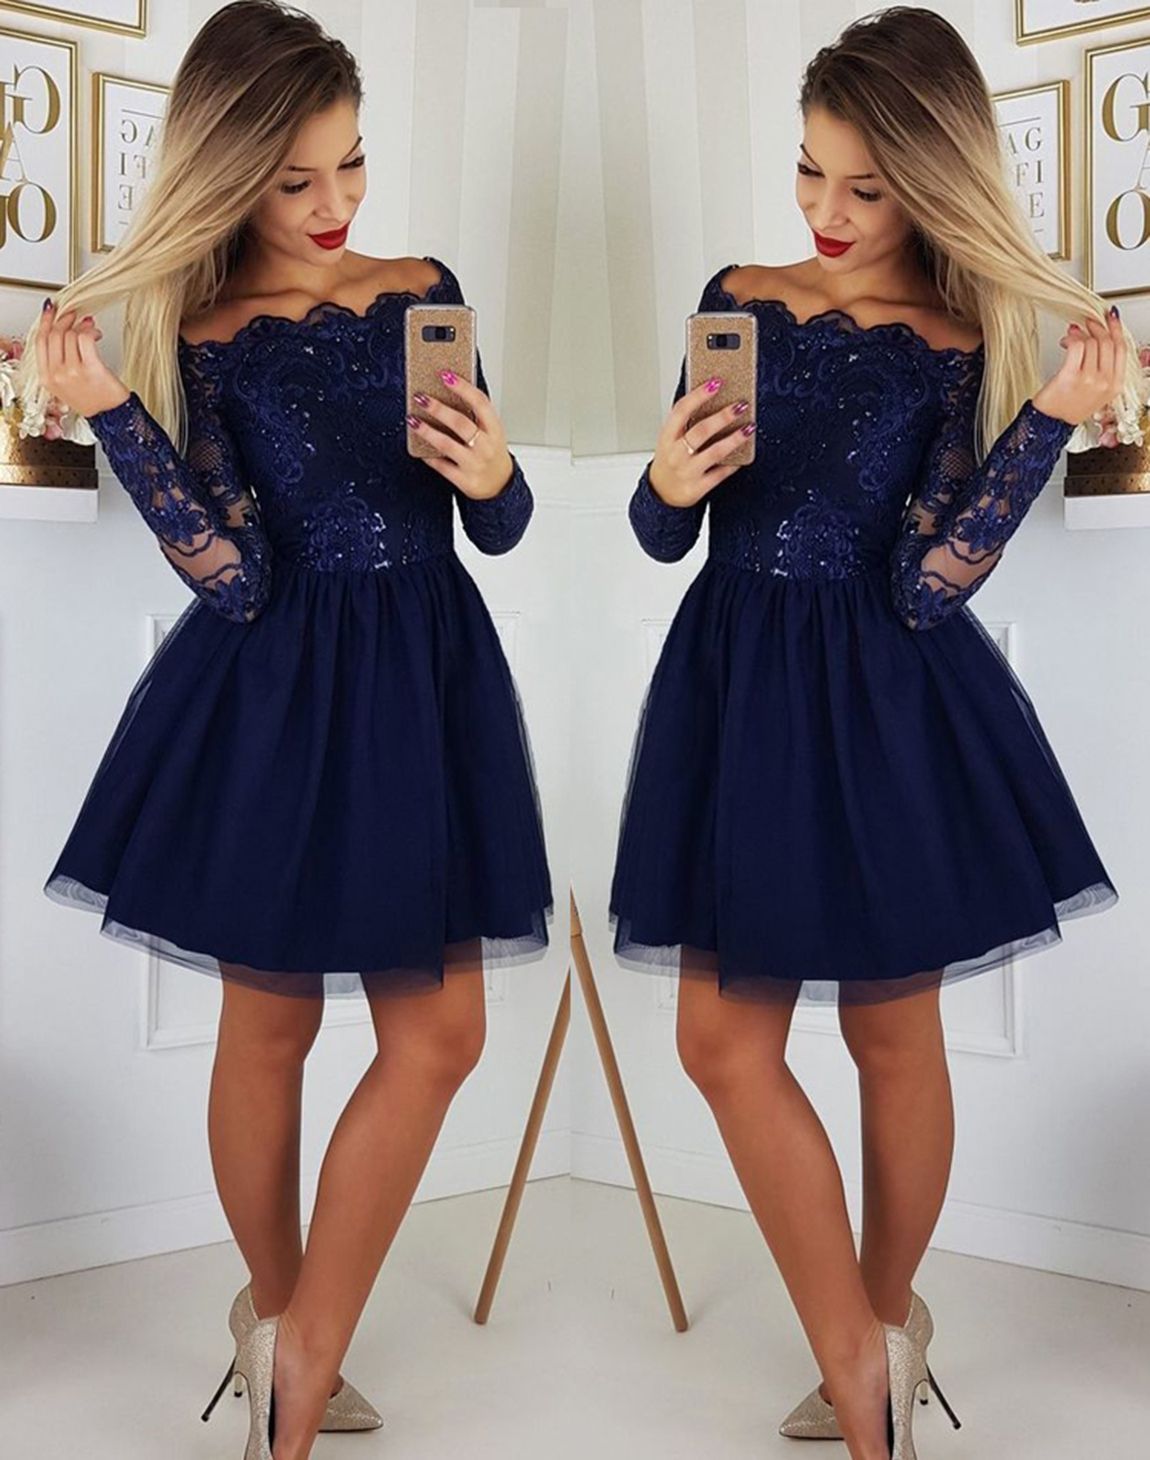 Wholesale Cheap Navy Blue Girls Party Dresses - Buy in Bulk on DHgate UK